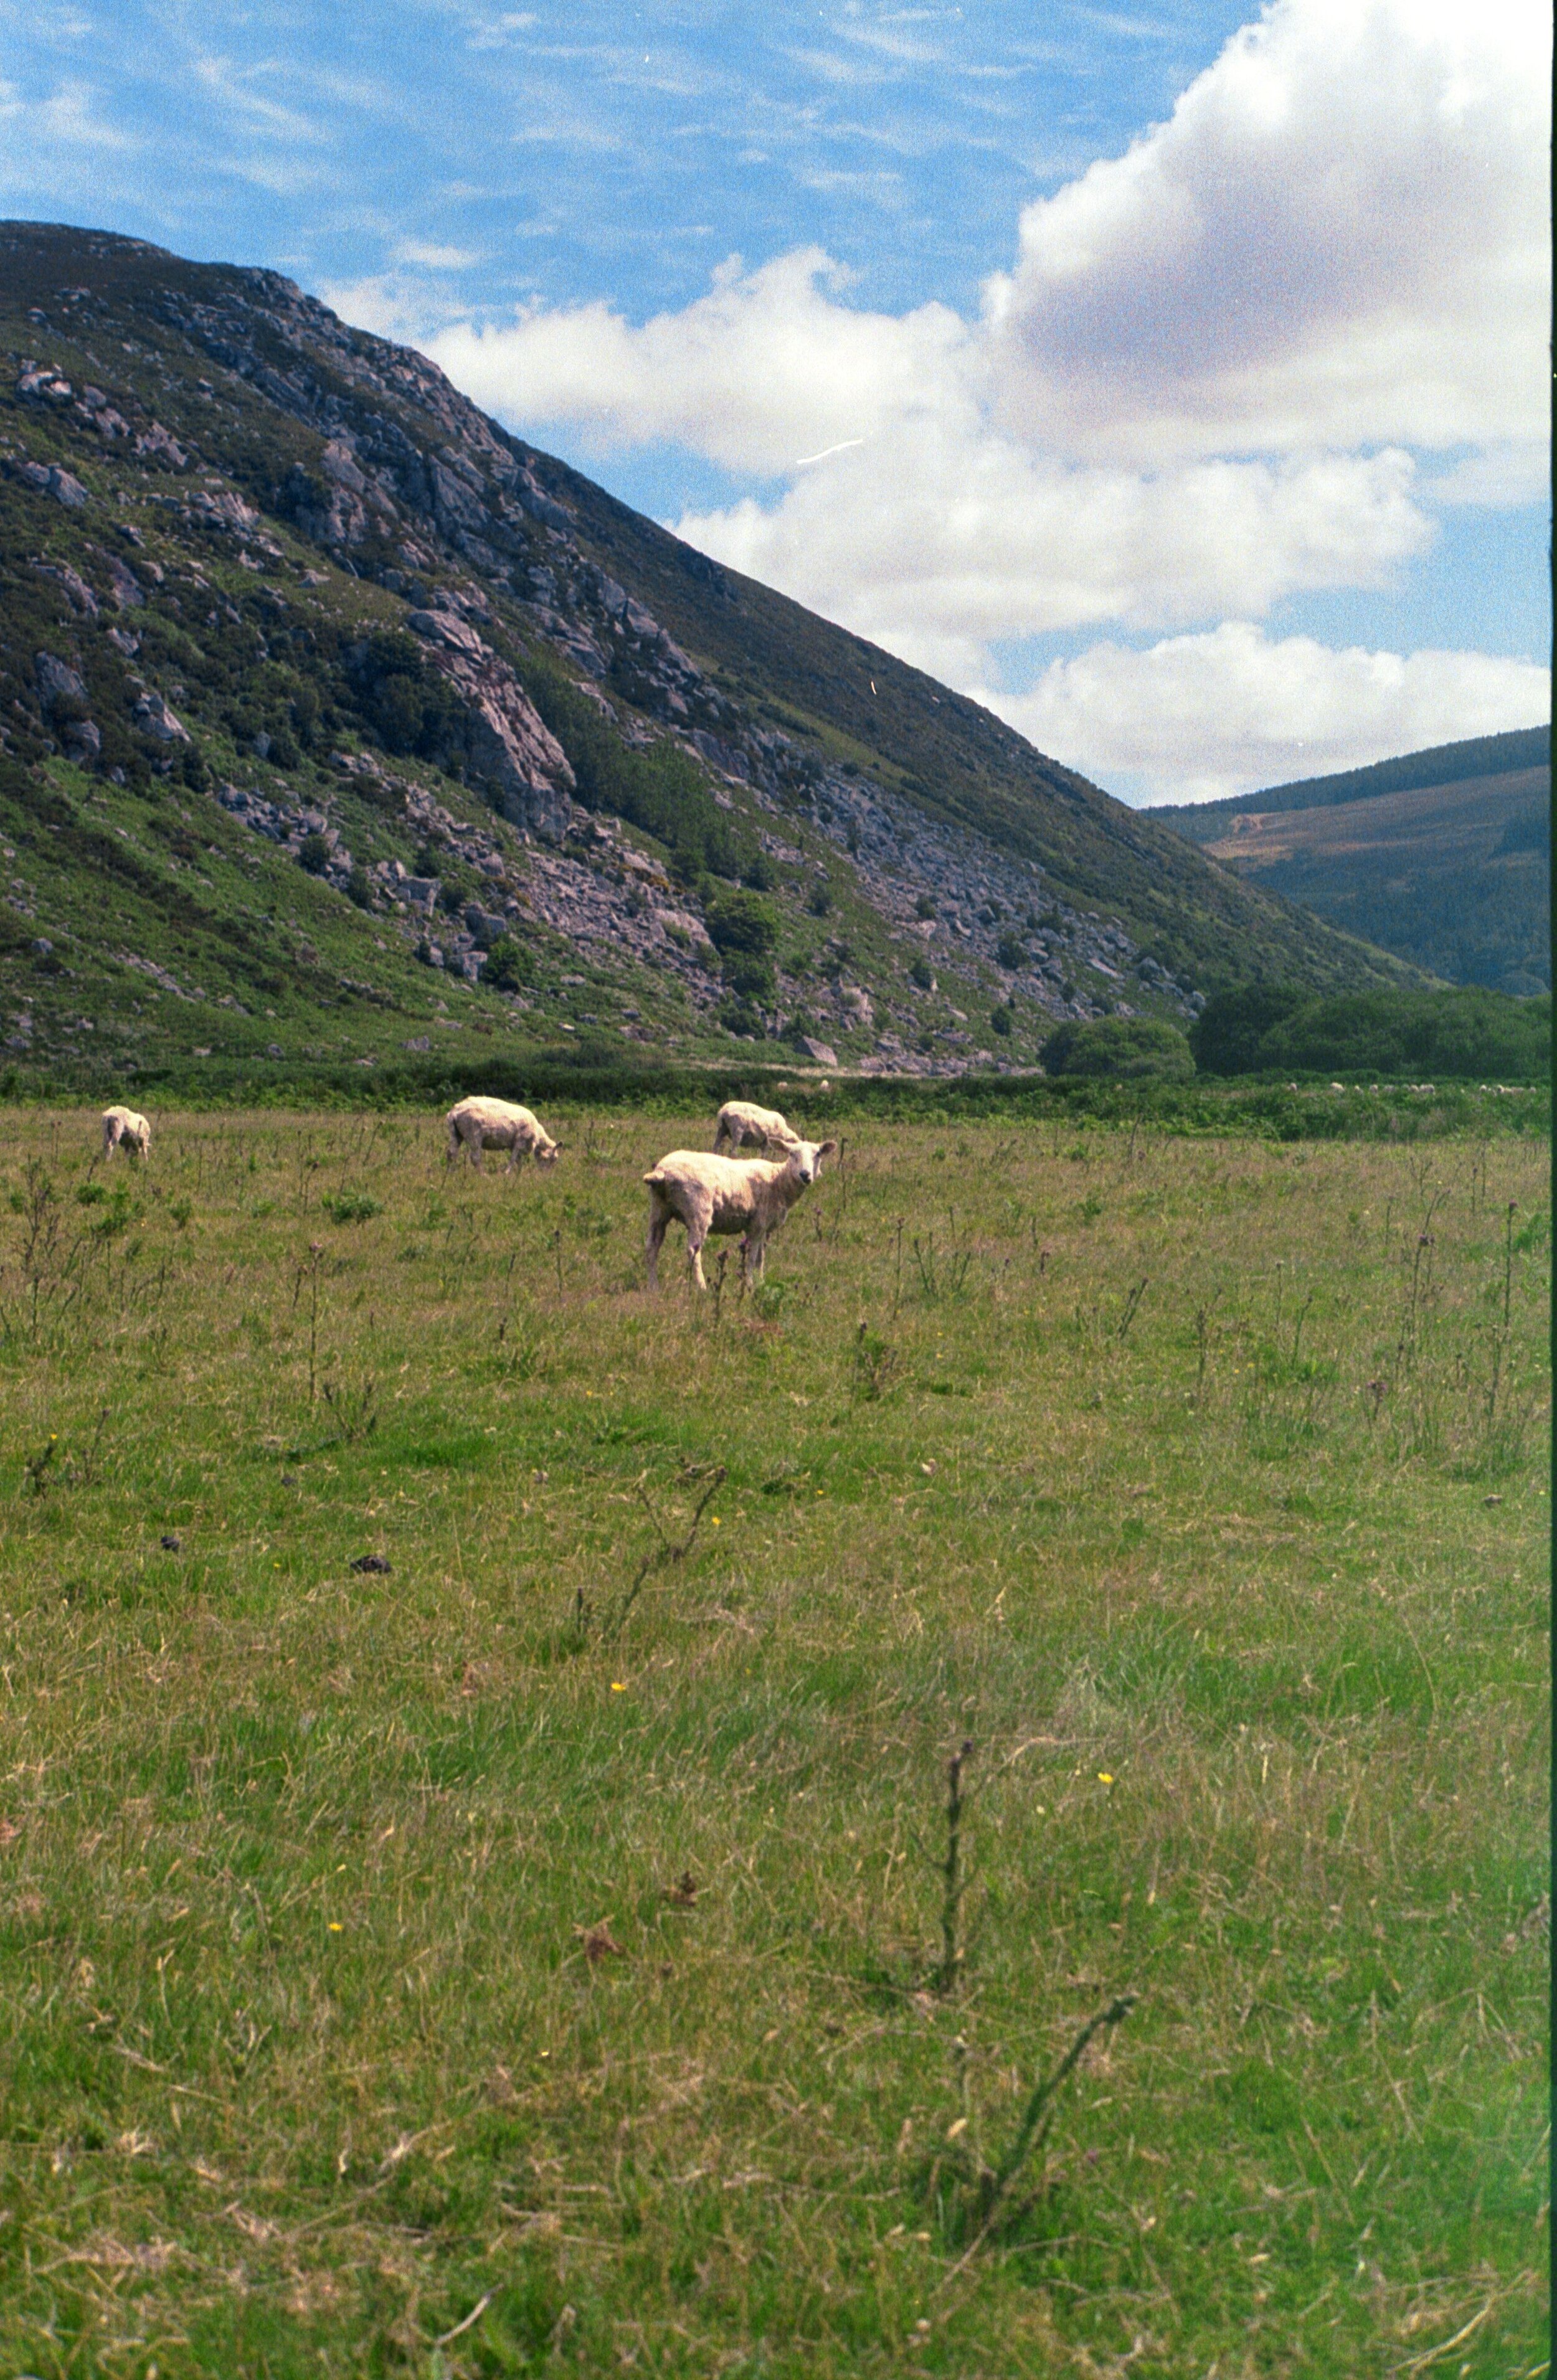 Sheep in the bank blue sky .jpg